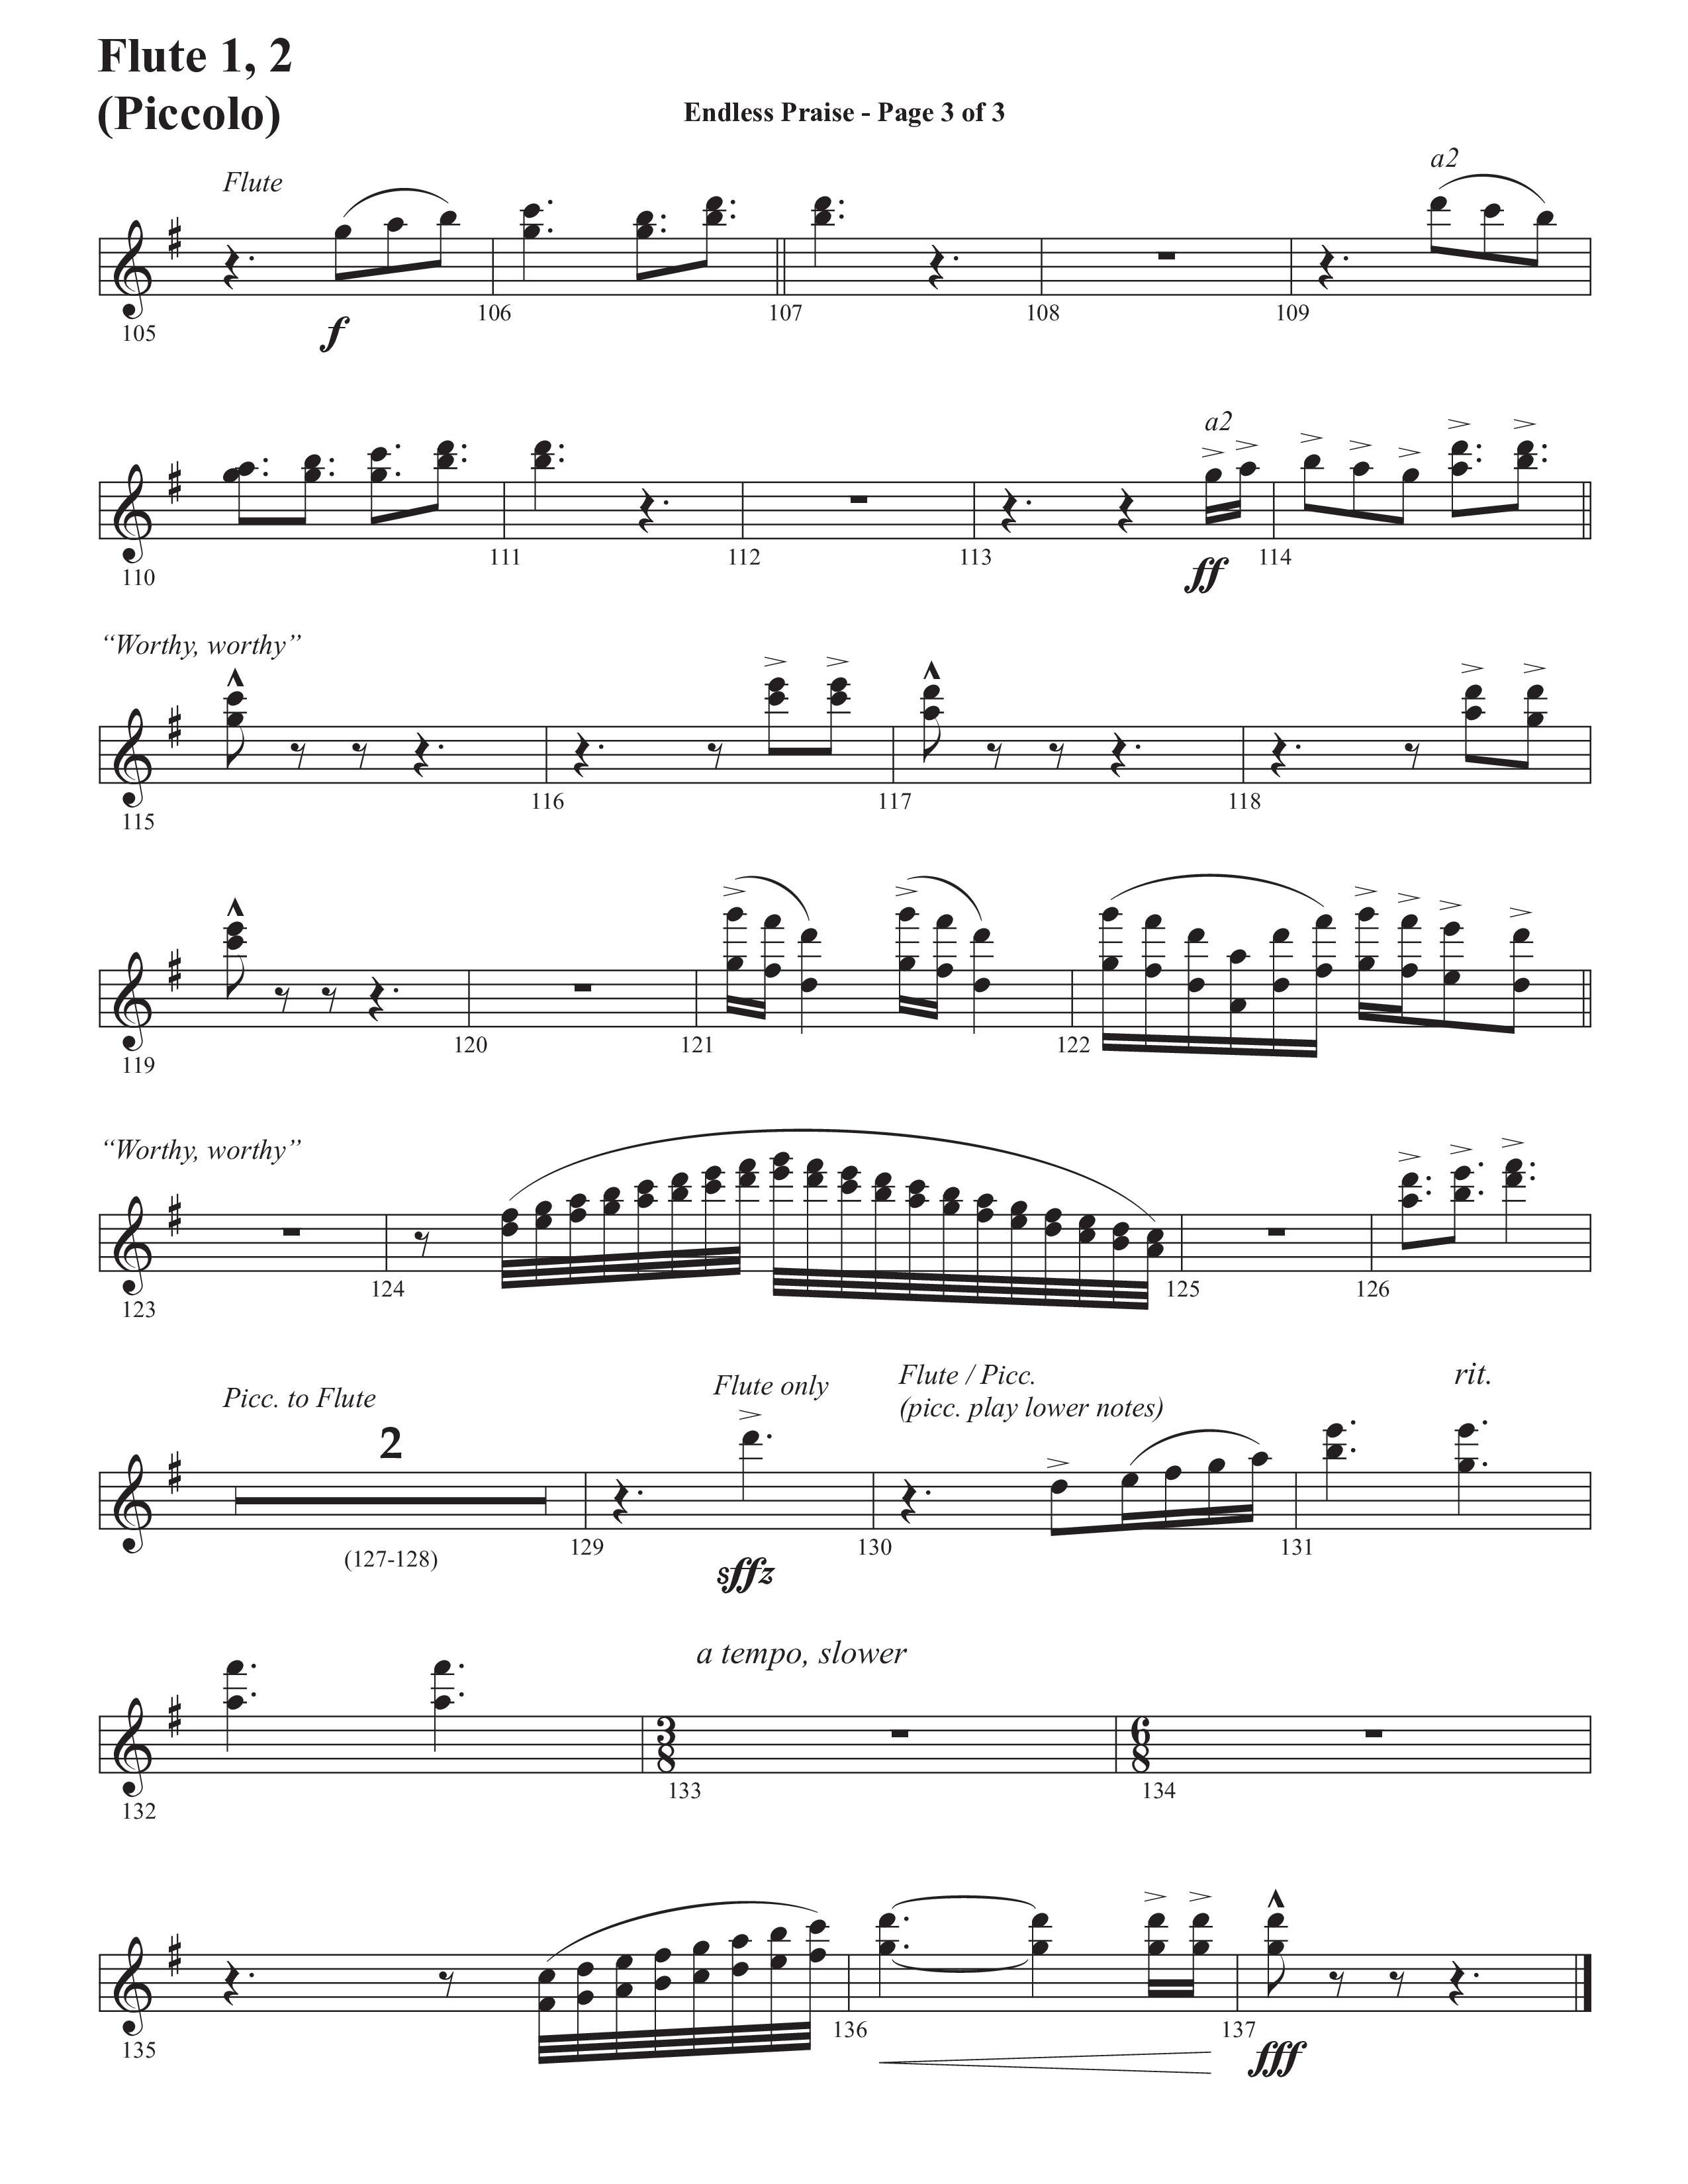 Endless Praise (Choral Anthem SATB) Flute 1/2 (Semsen Music / Arr. Daniel Semsen)